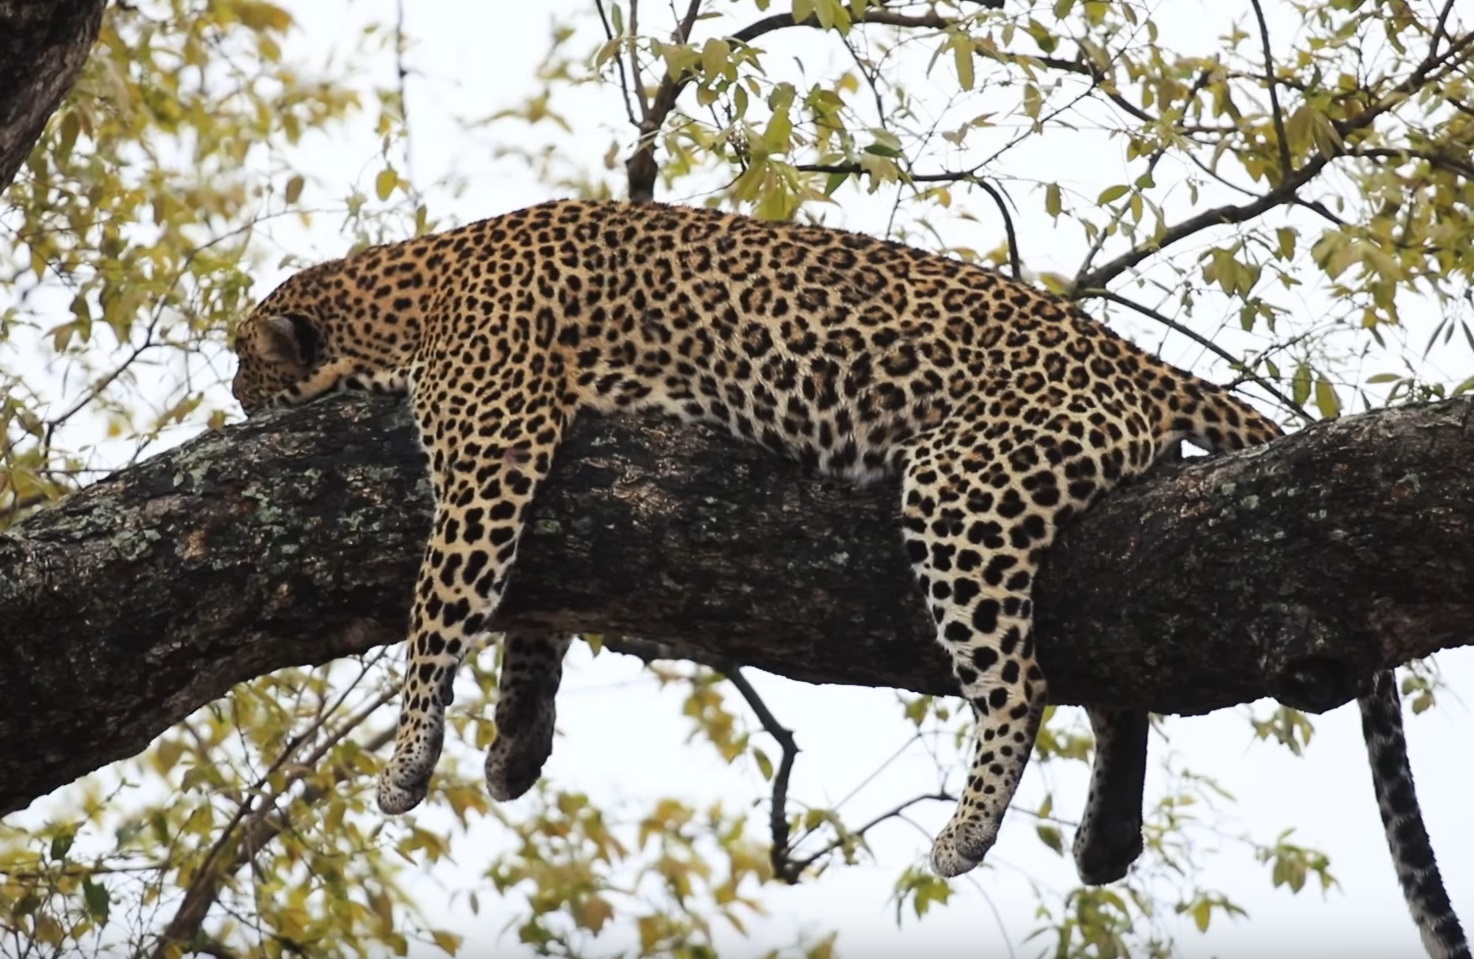 A Beautiful Leopard Taking A Nap